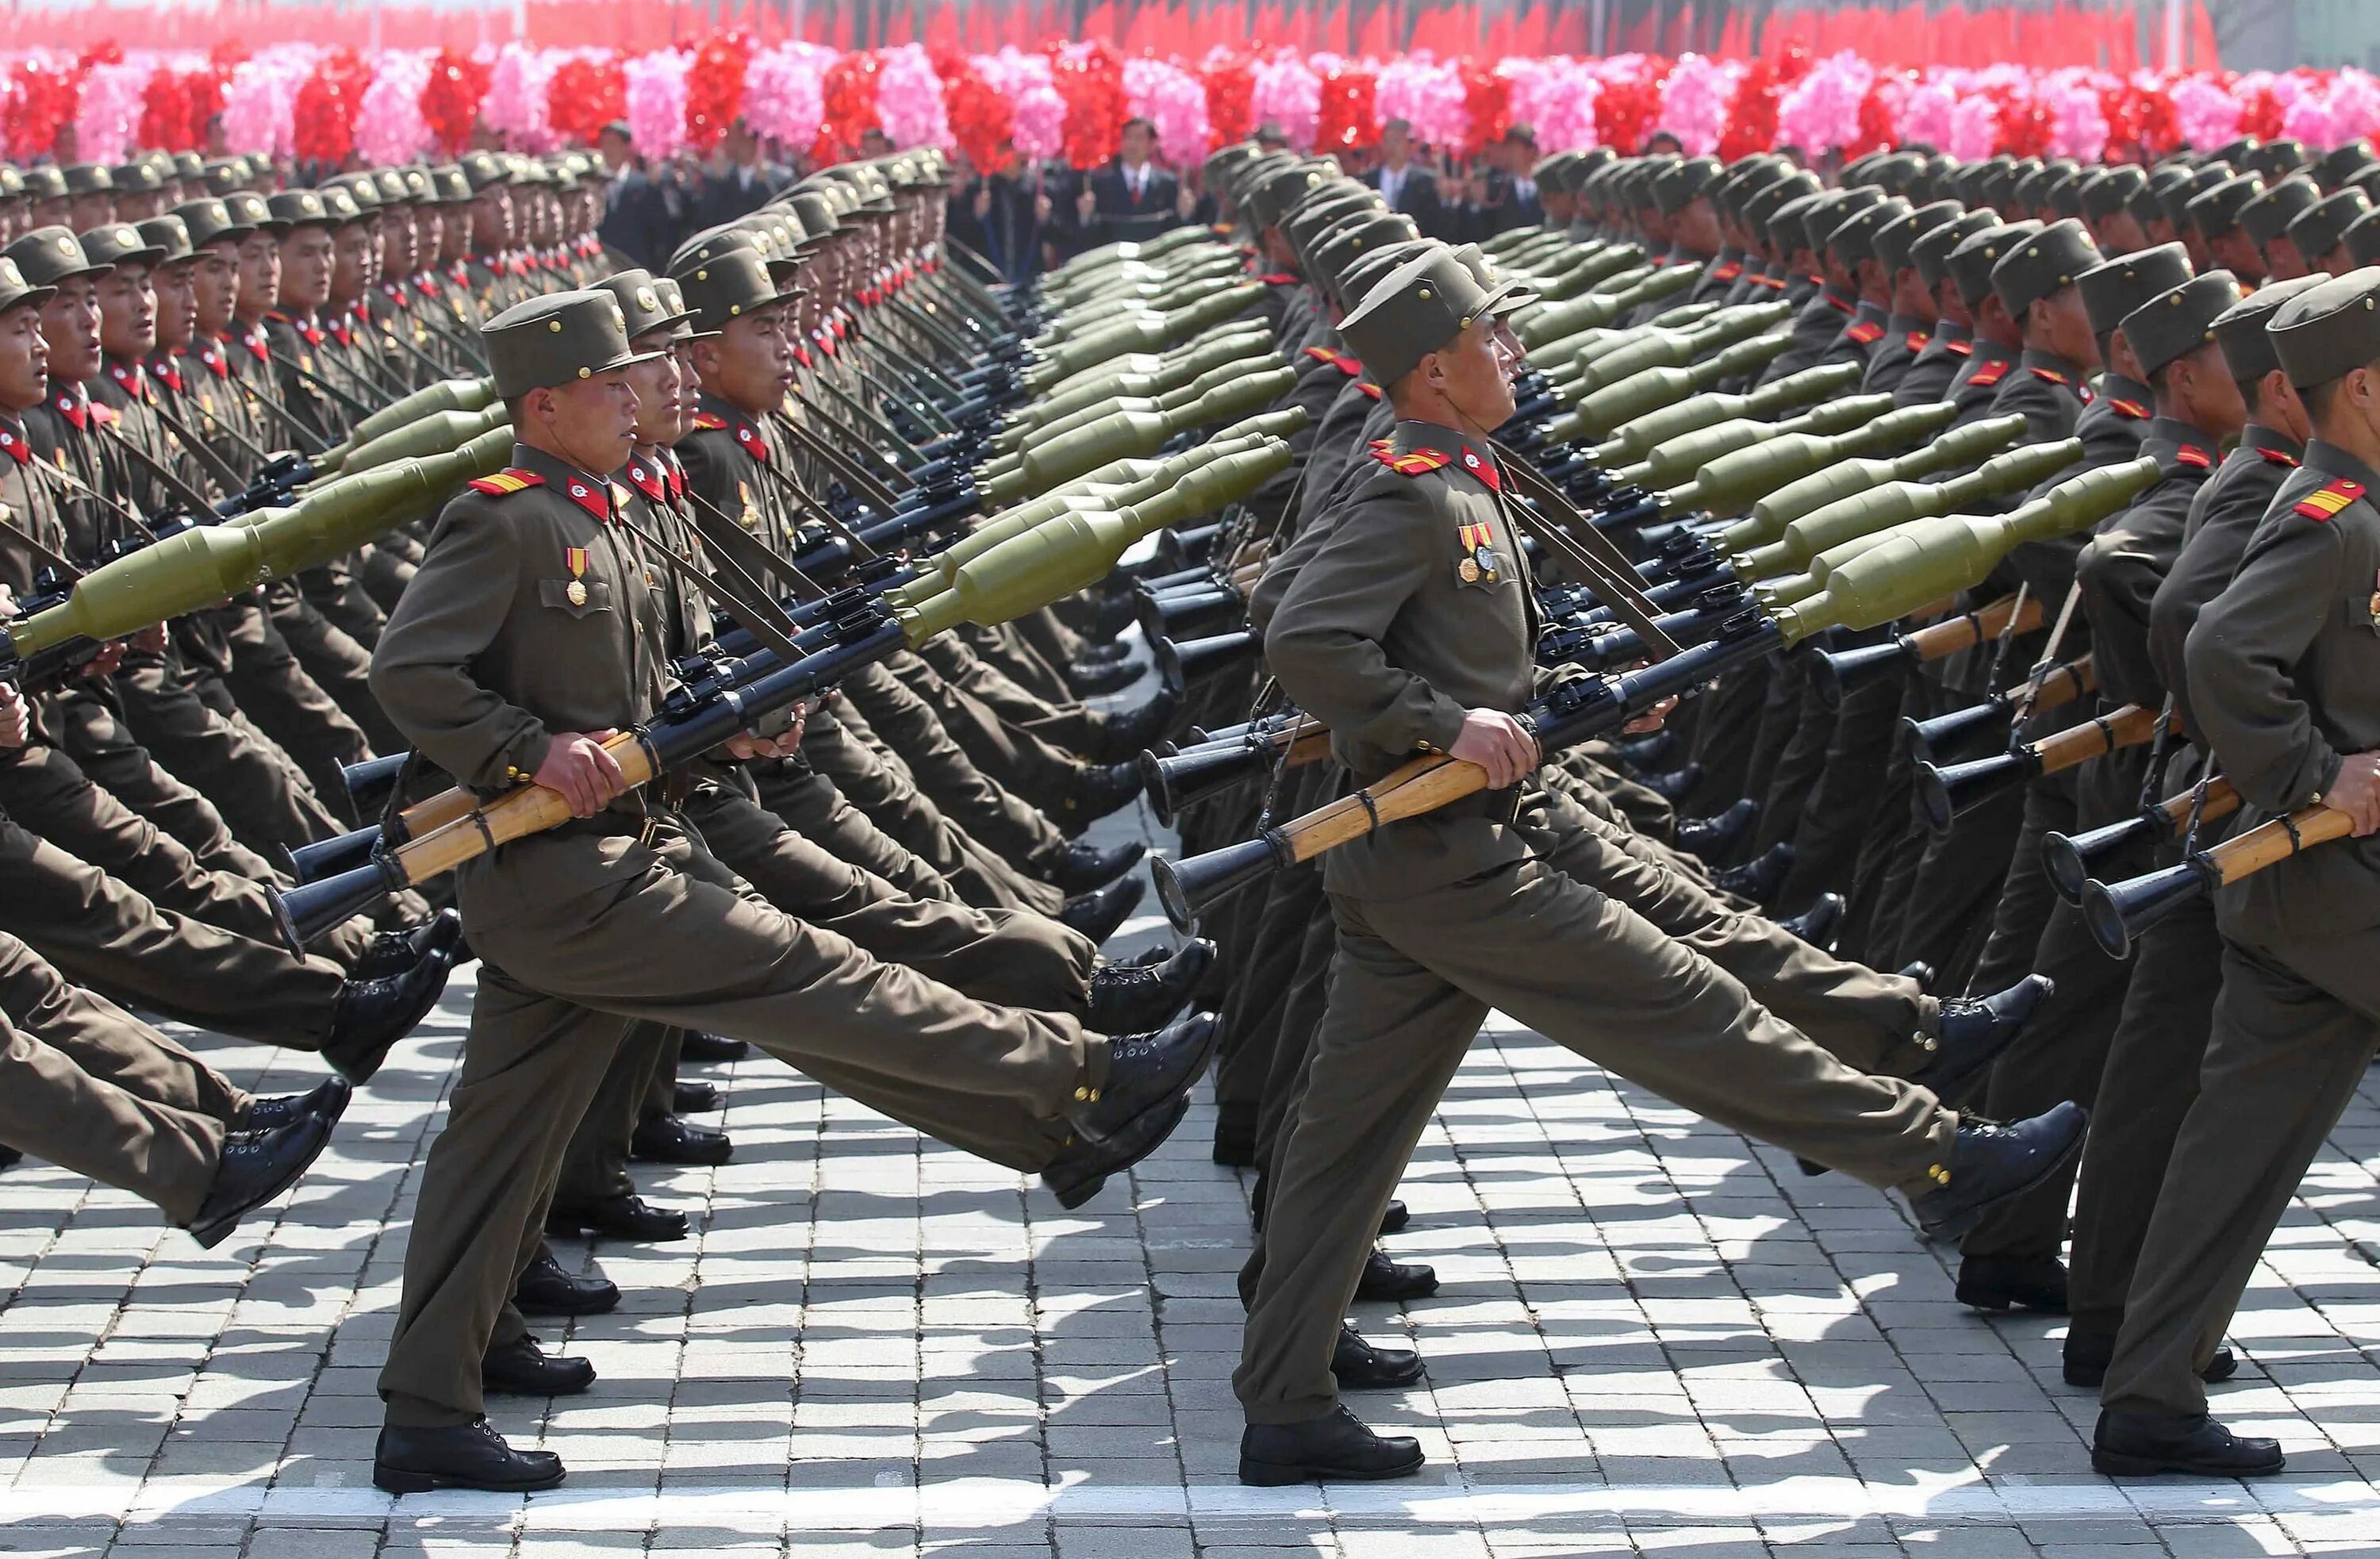 Армия Северной Кореи. Солдаты Северной Кореи. Армия КНДР армия Северной Кореи. Маршировка в Северной Корее. Армейские строевые